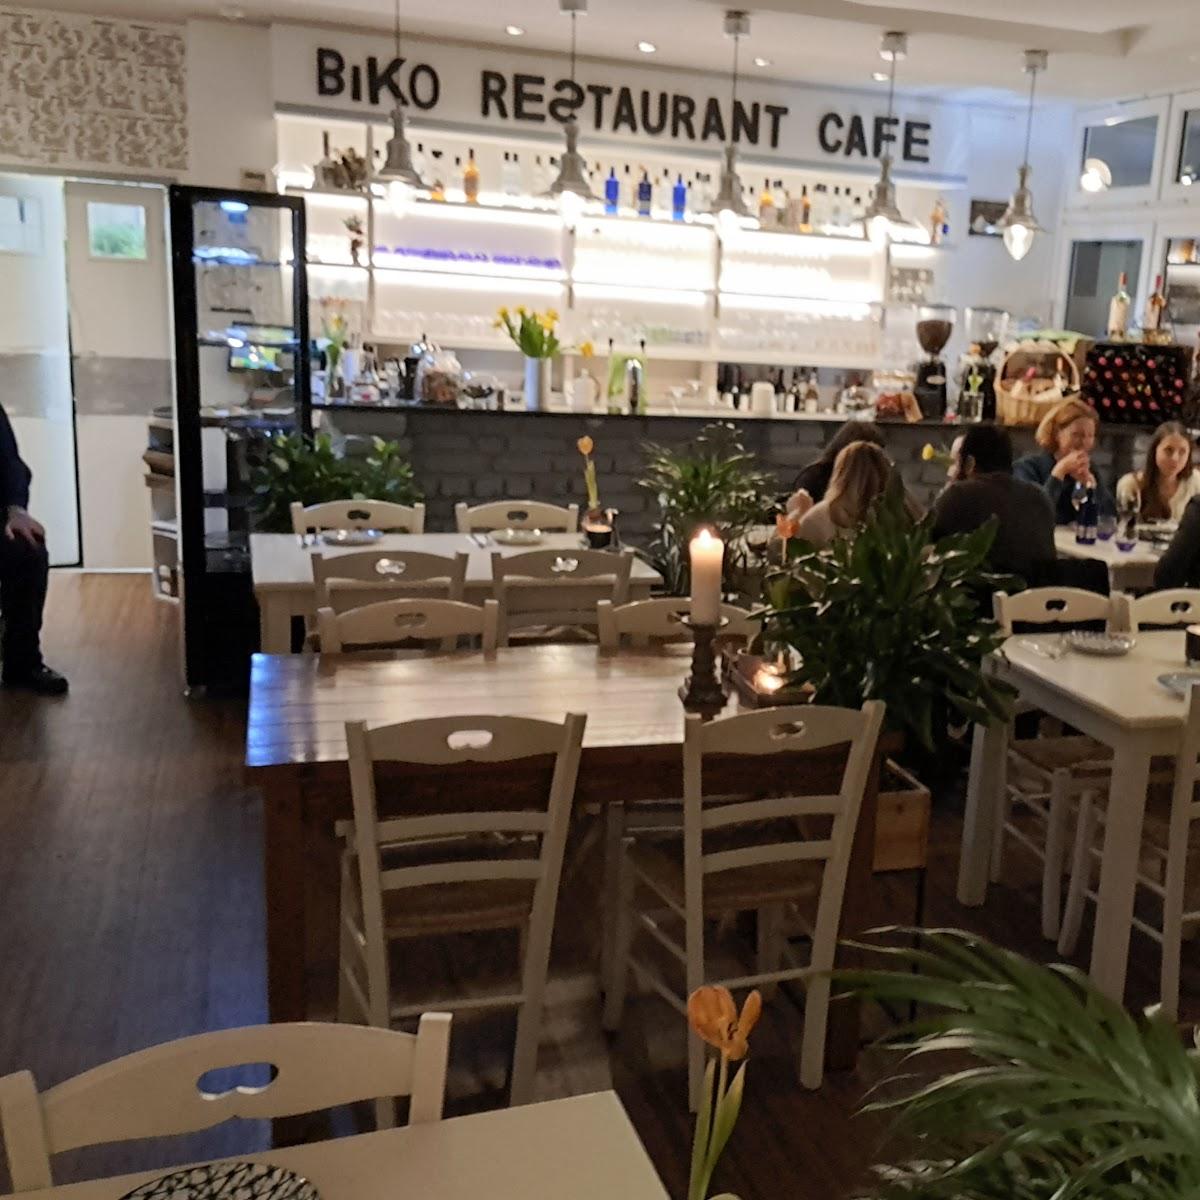 Restaurant "Biko Restaurant & Café" in Ratingen